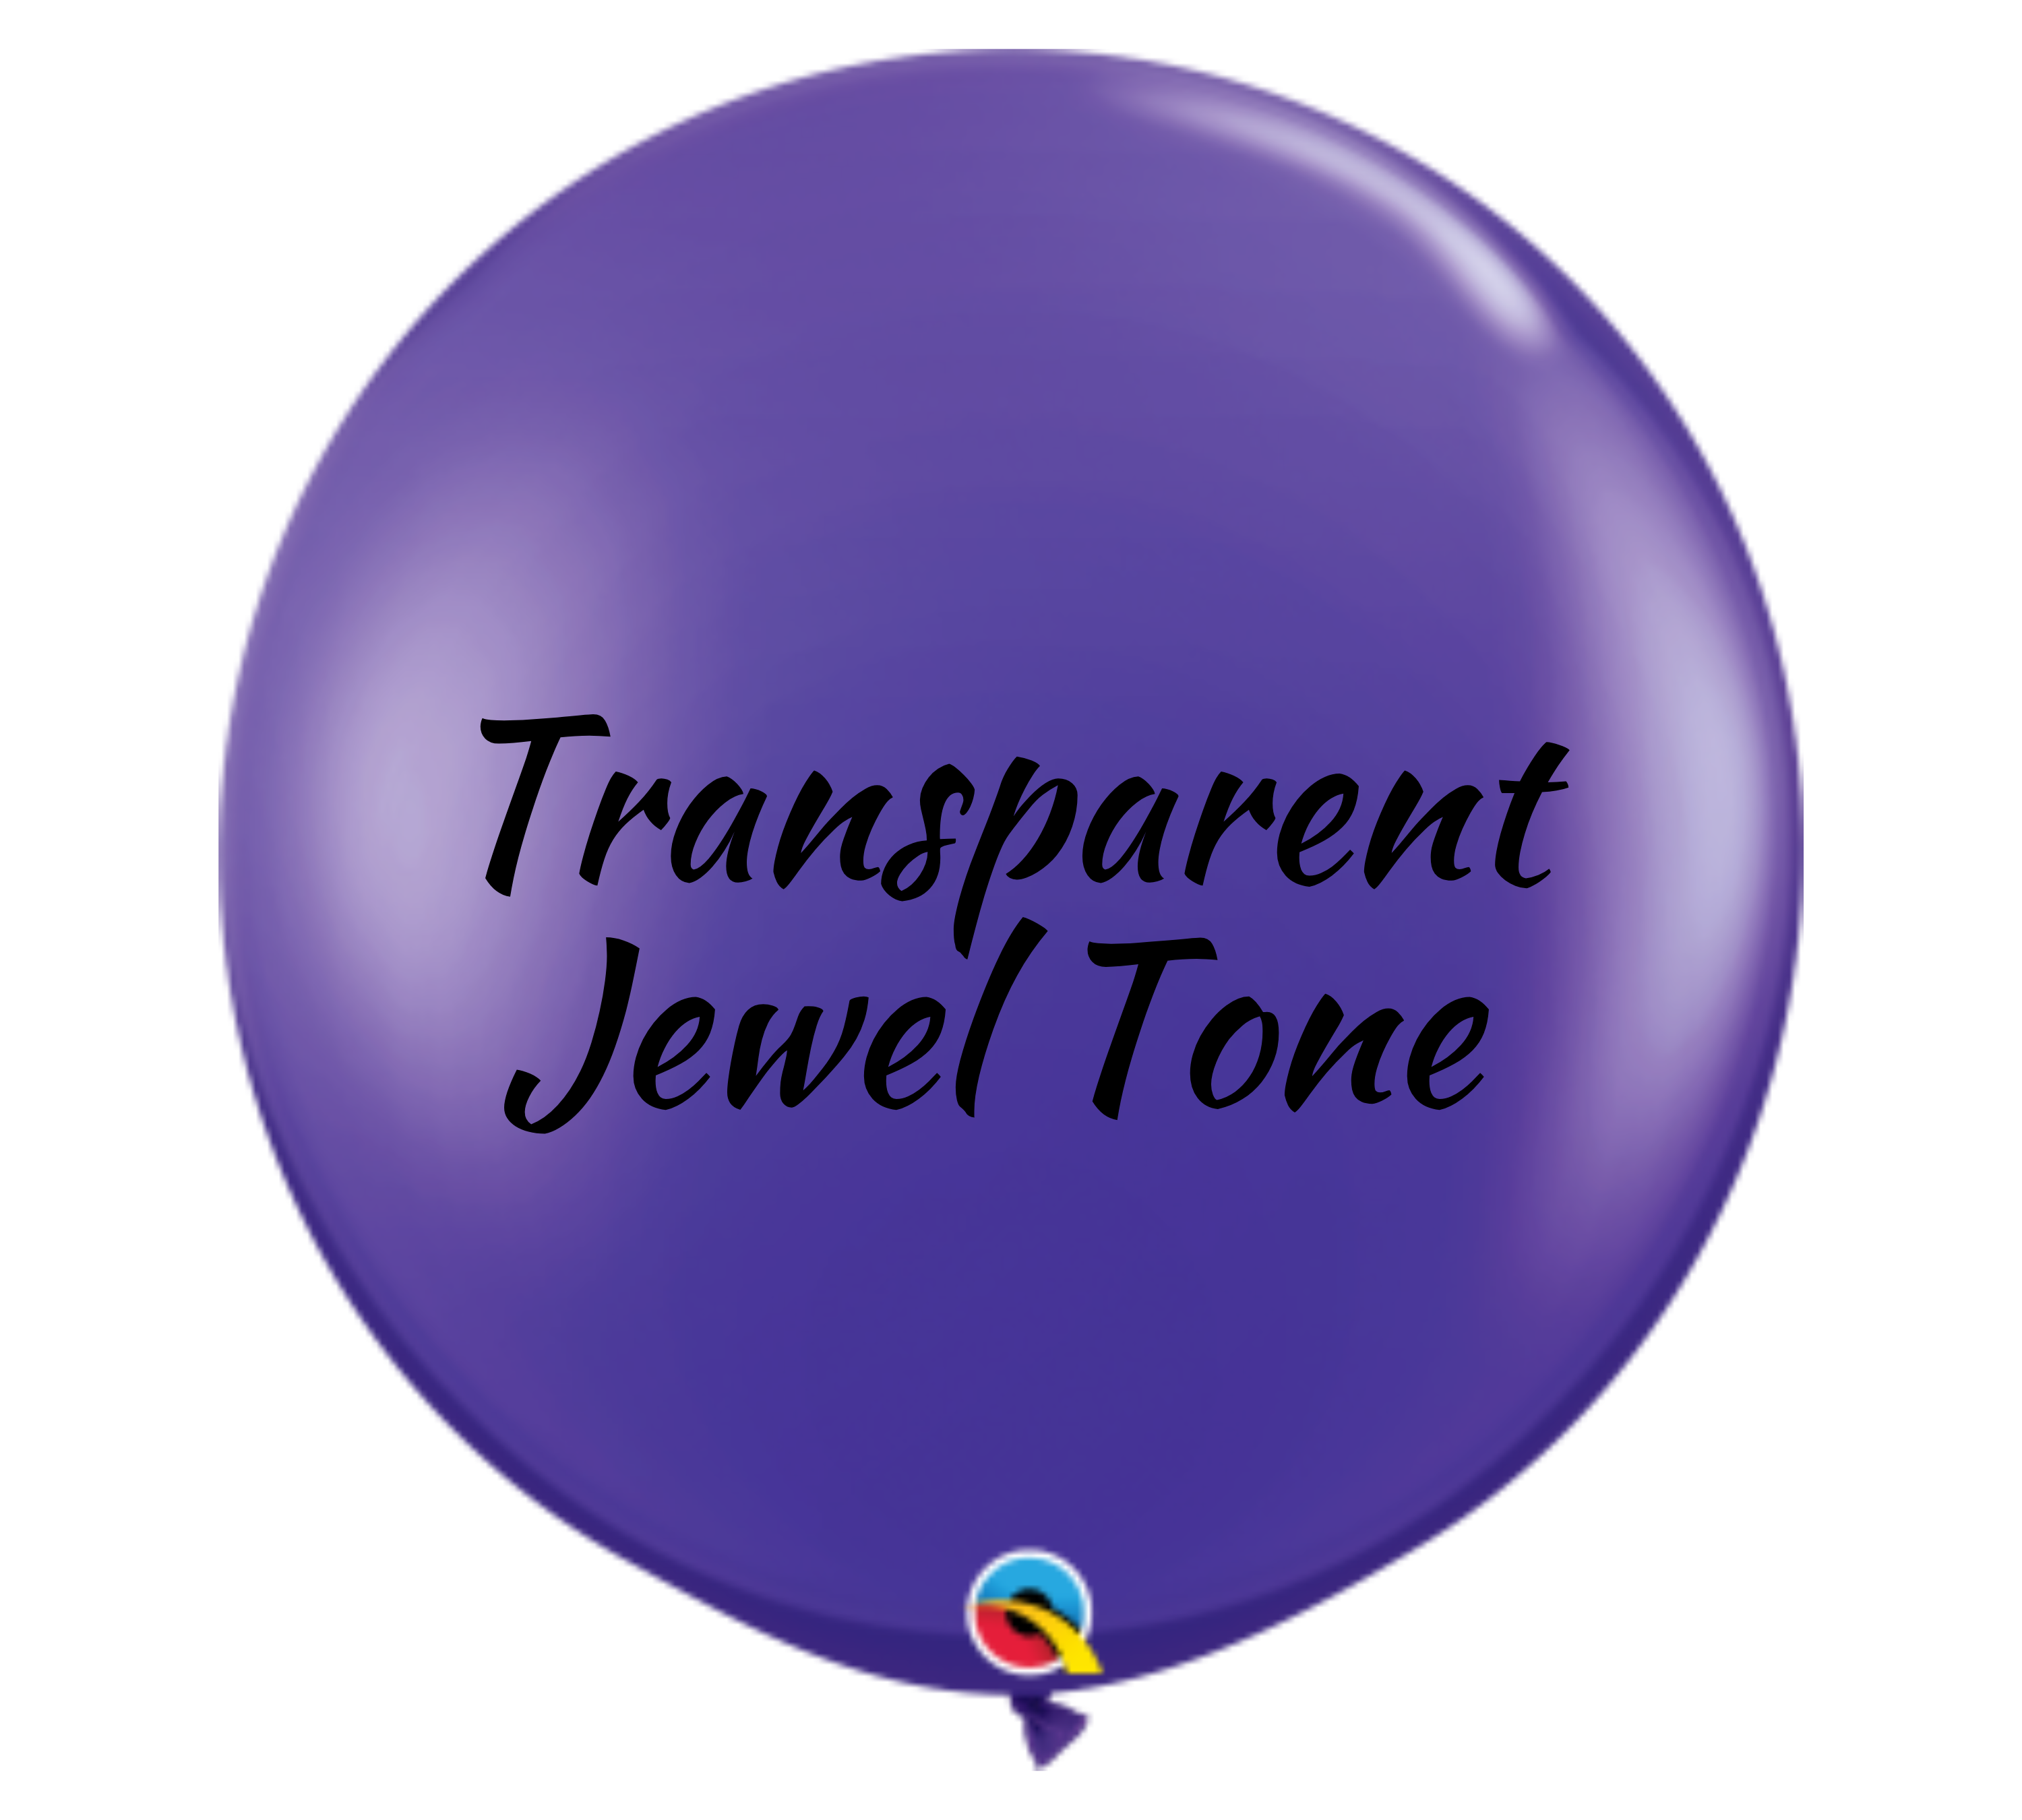 36" Qualatex Jewel Quartz Purple Latex Balloons - 3 Foot Giant | 2 Count